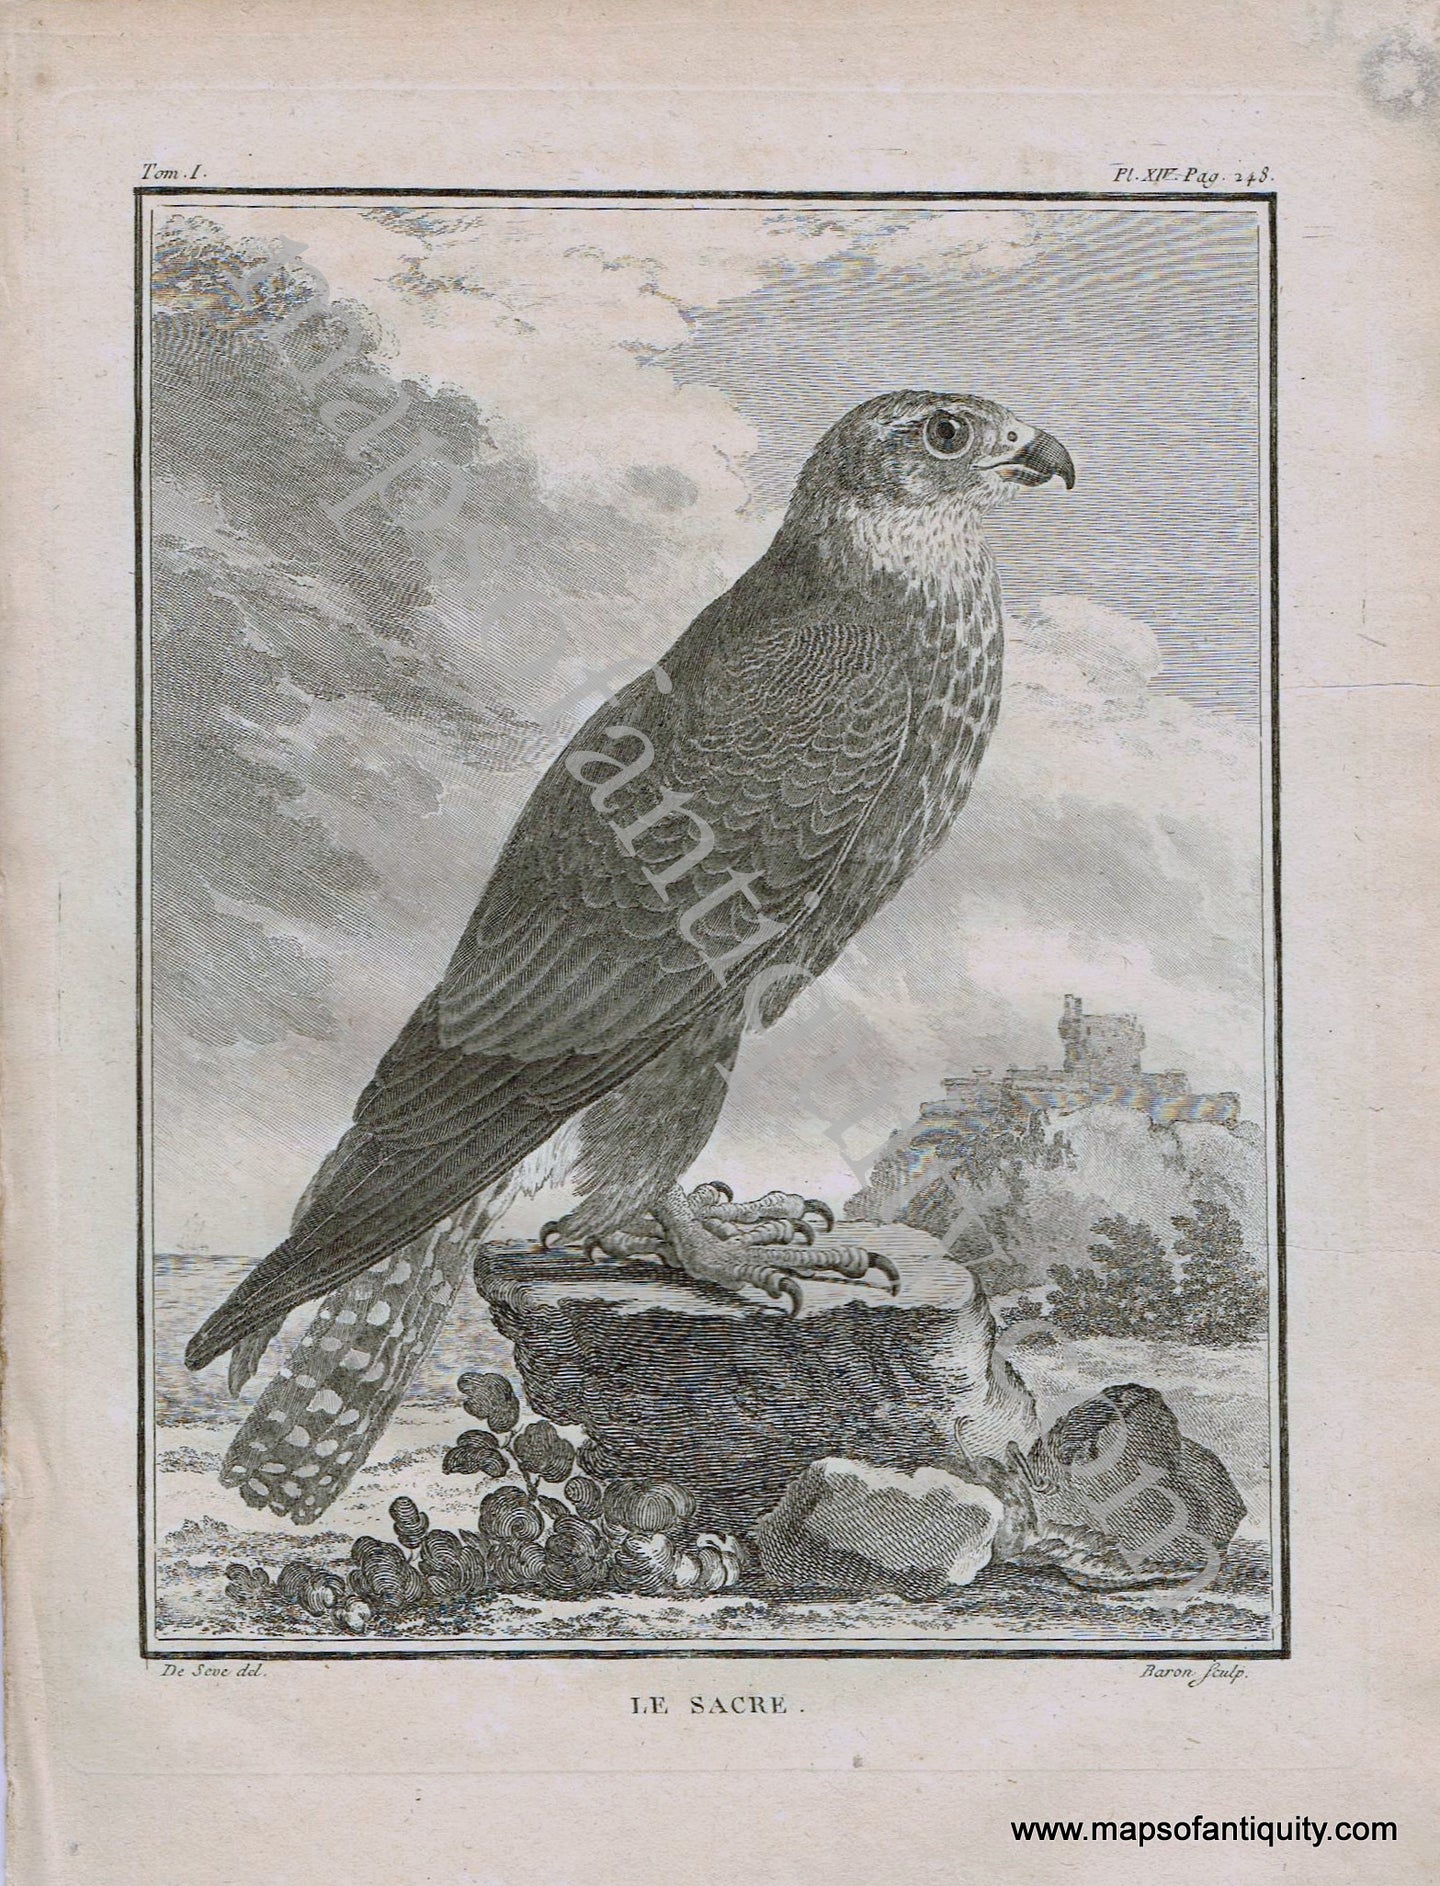 Antique-Black-and-White-Engraved-Illustration-Saker-Falcon-Le-Sacre-Bird-c.-1770-Buffon-Birds-1800s-19th-century-Maps-of-Antiquity